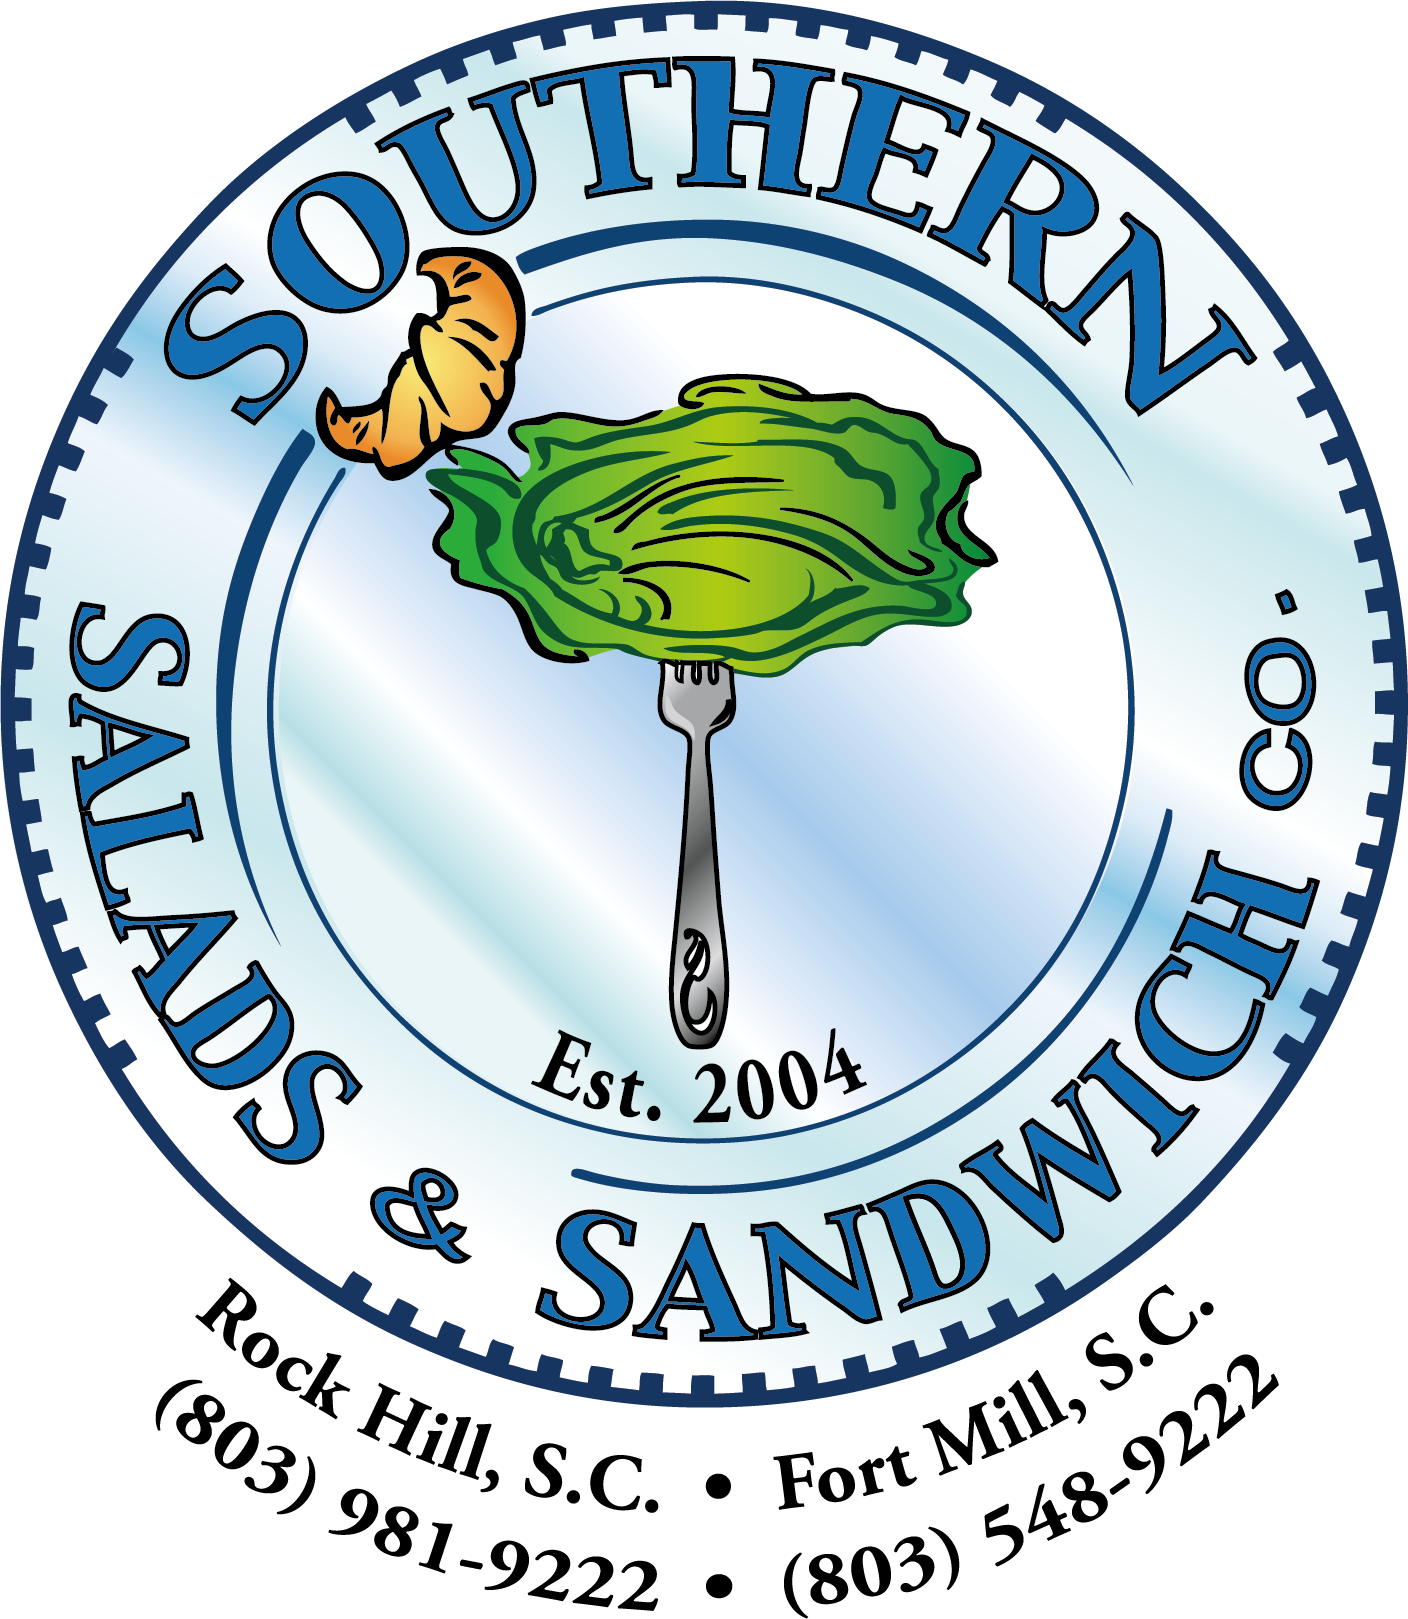 Southern Salad and Sandwich Company Home